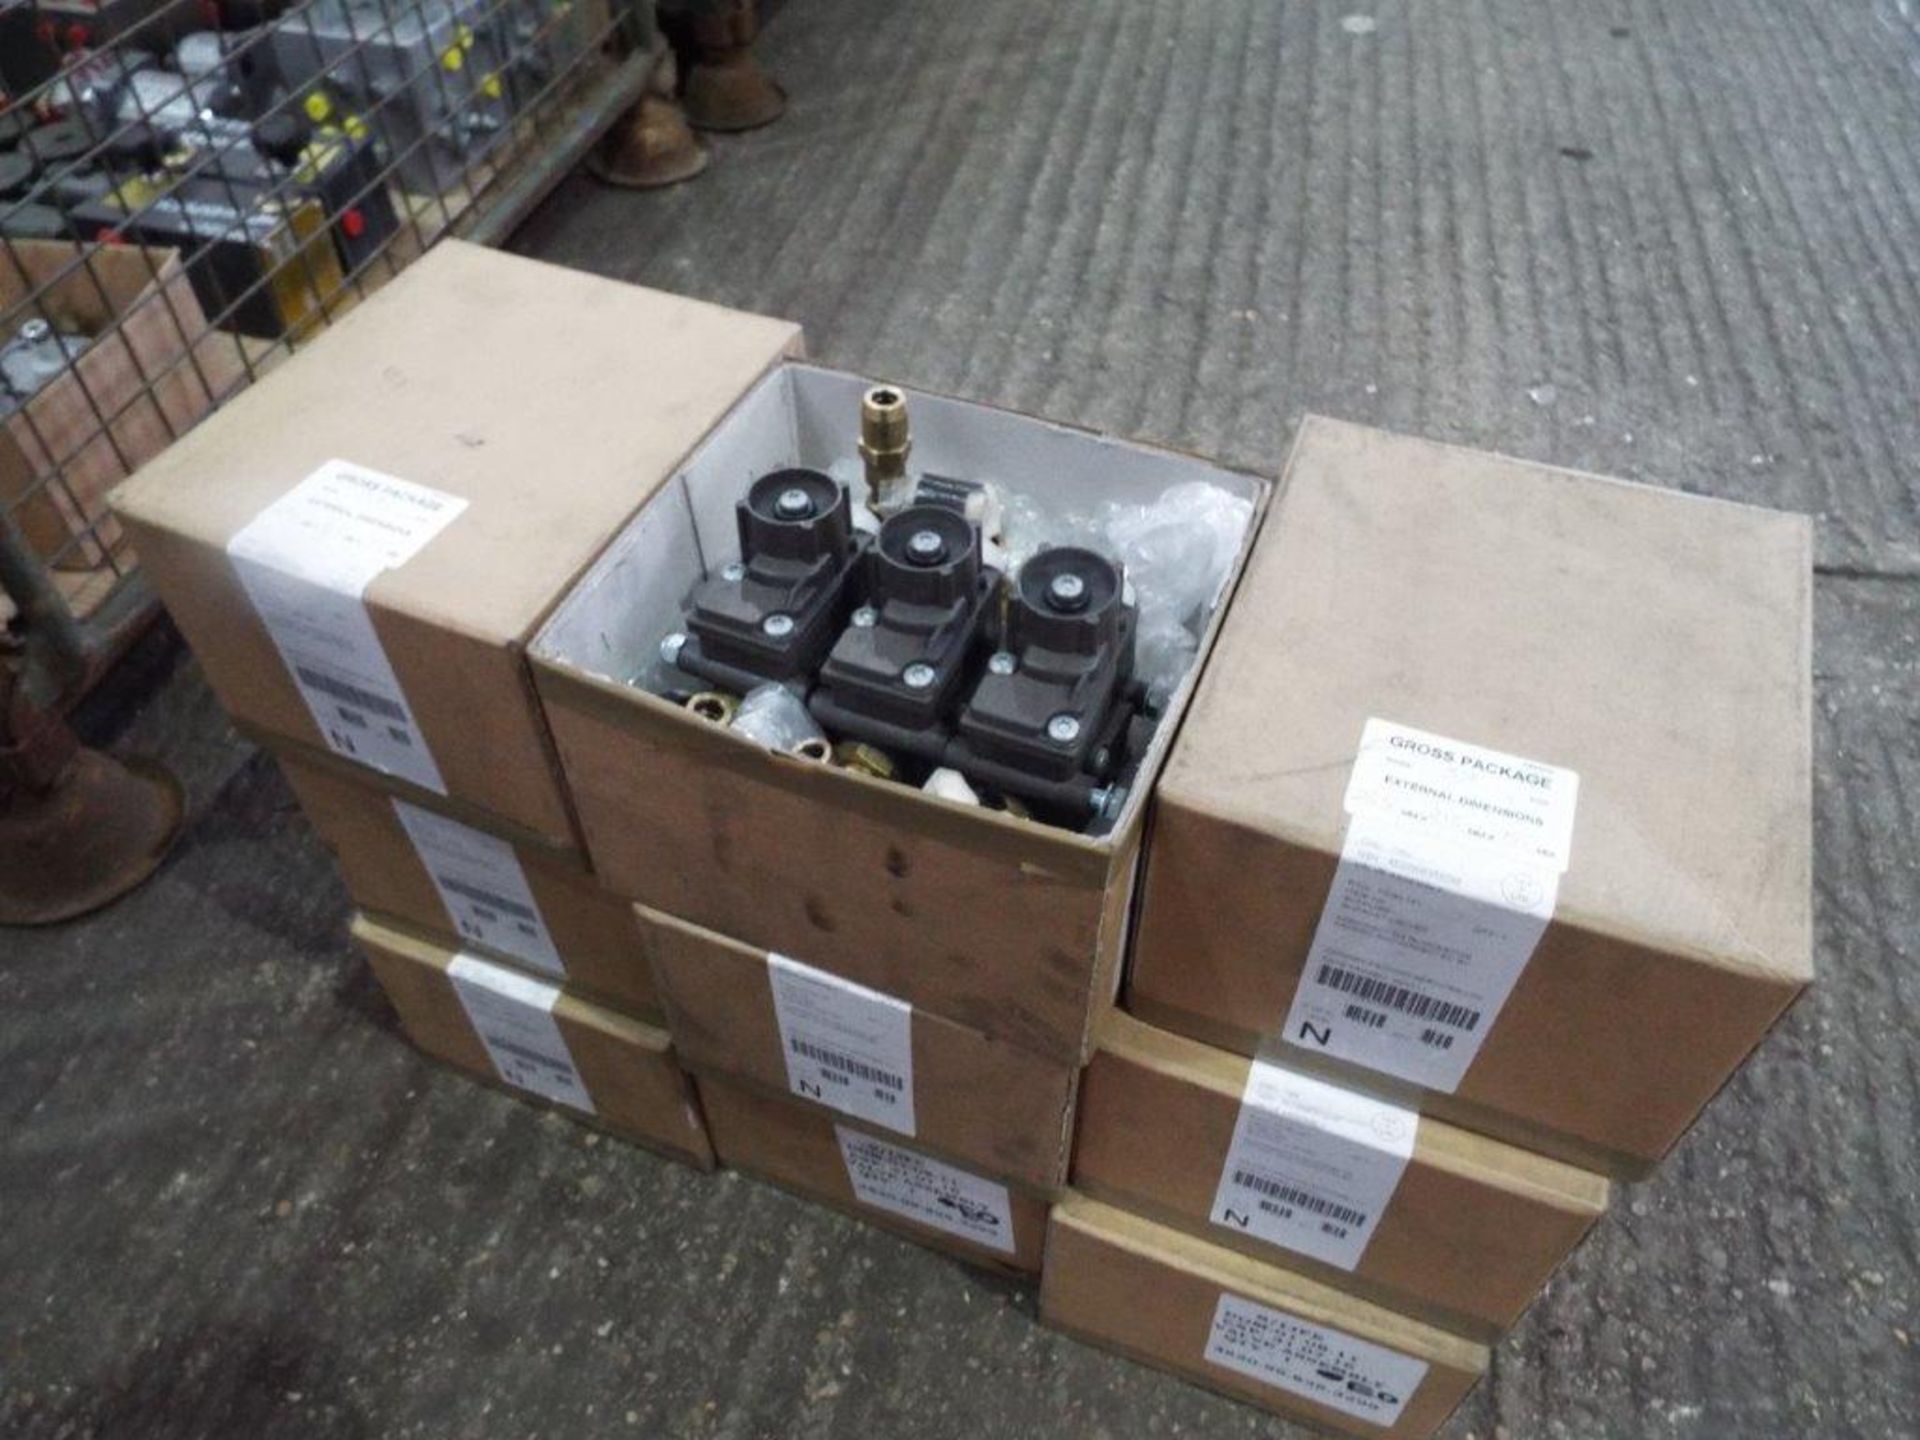 9 x Knorr Bremse / Supacat Hydraulic Valve Blocks P/No 70-30-161